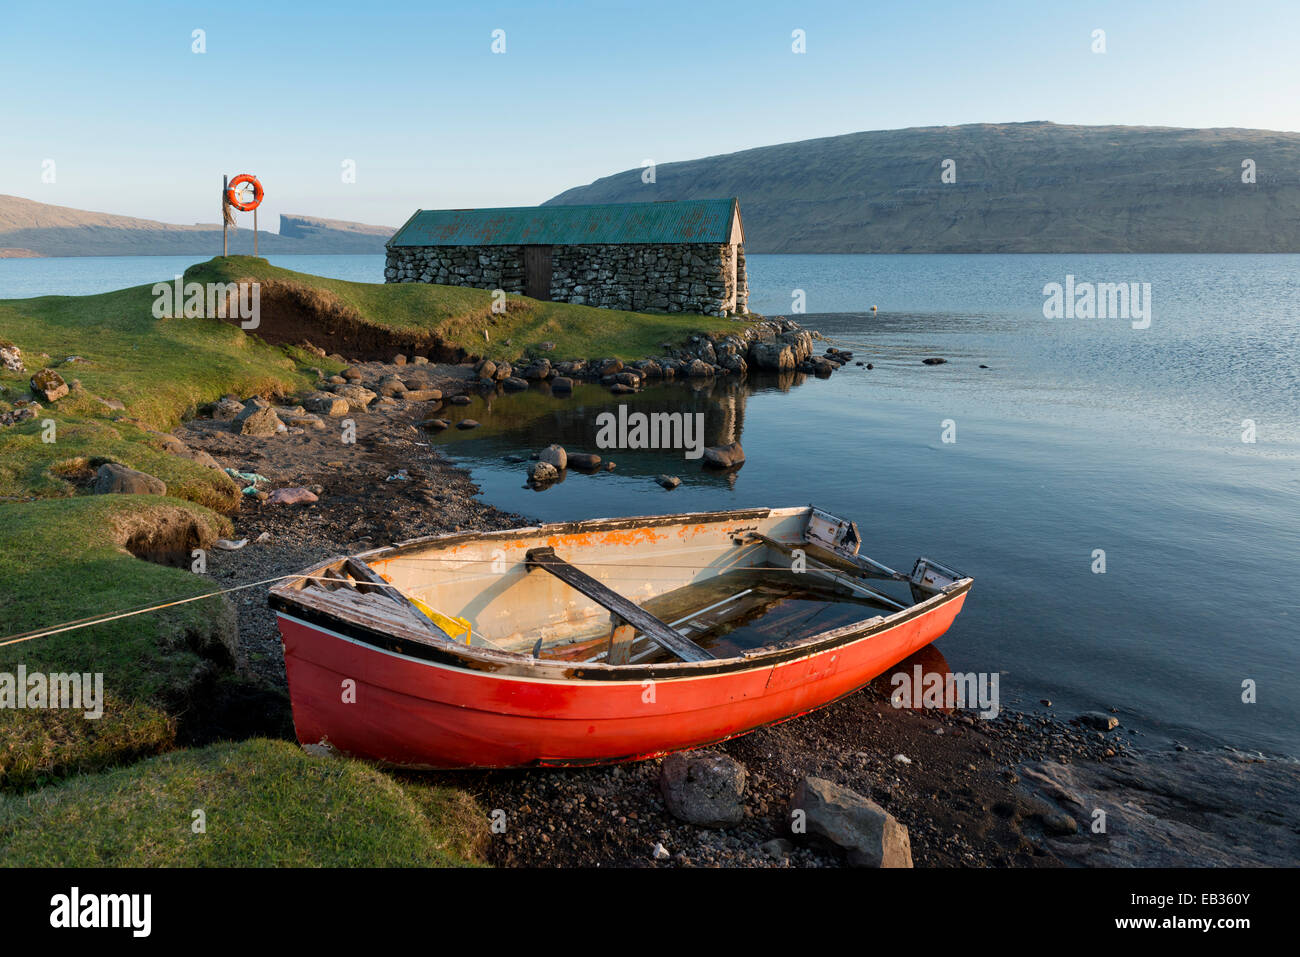 Red boat in front of a boat house on Lake Sørvágsvatn or Leitisvatn, Vágar, Faroe Islands, Denmark Stock Photo